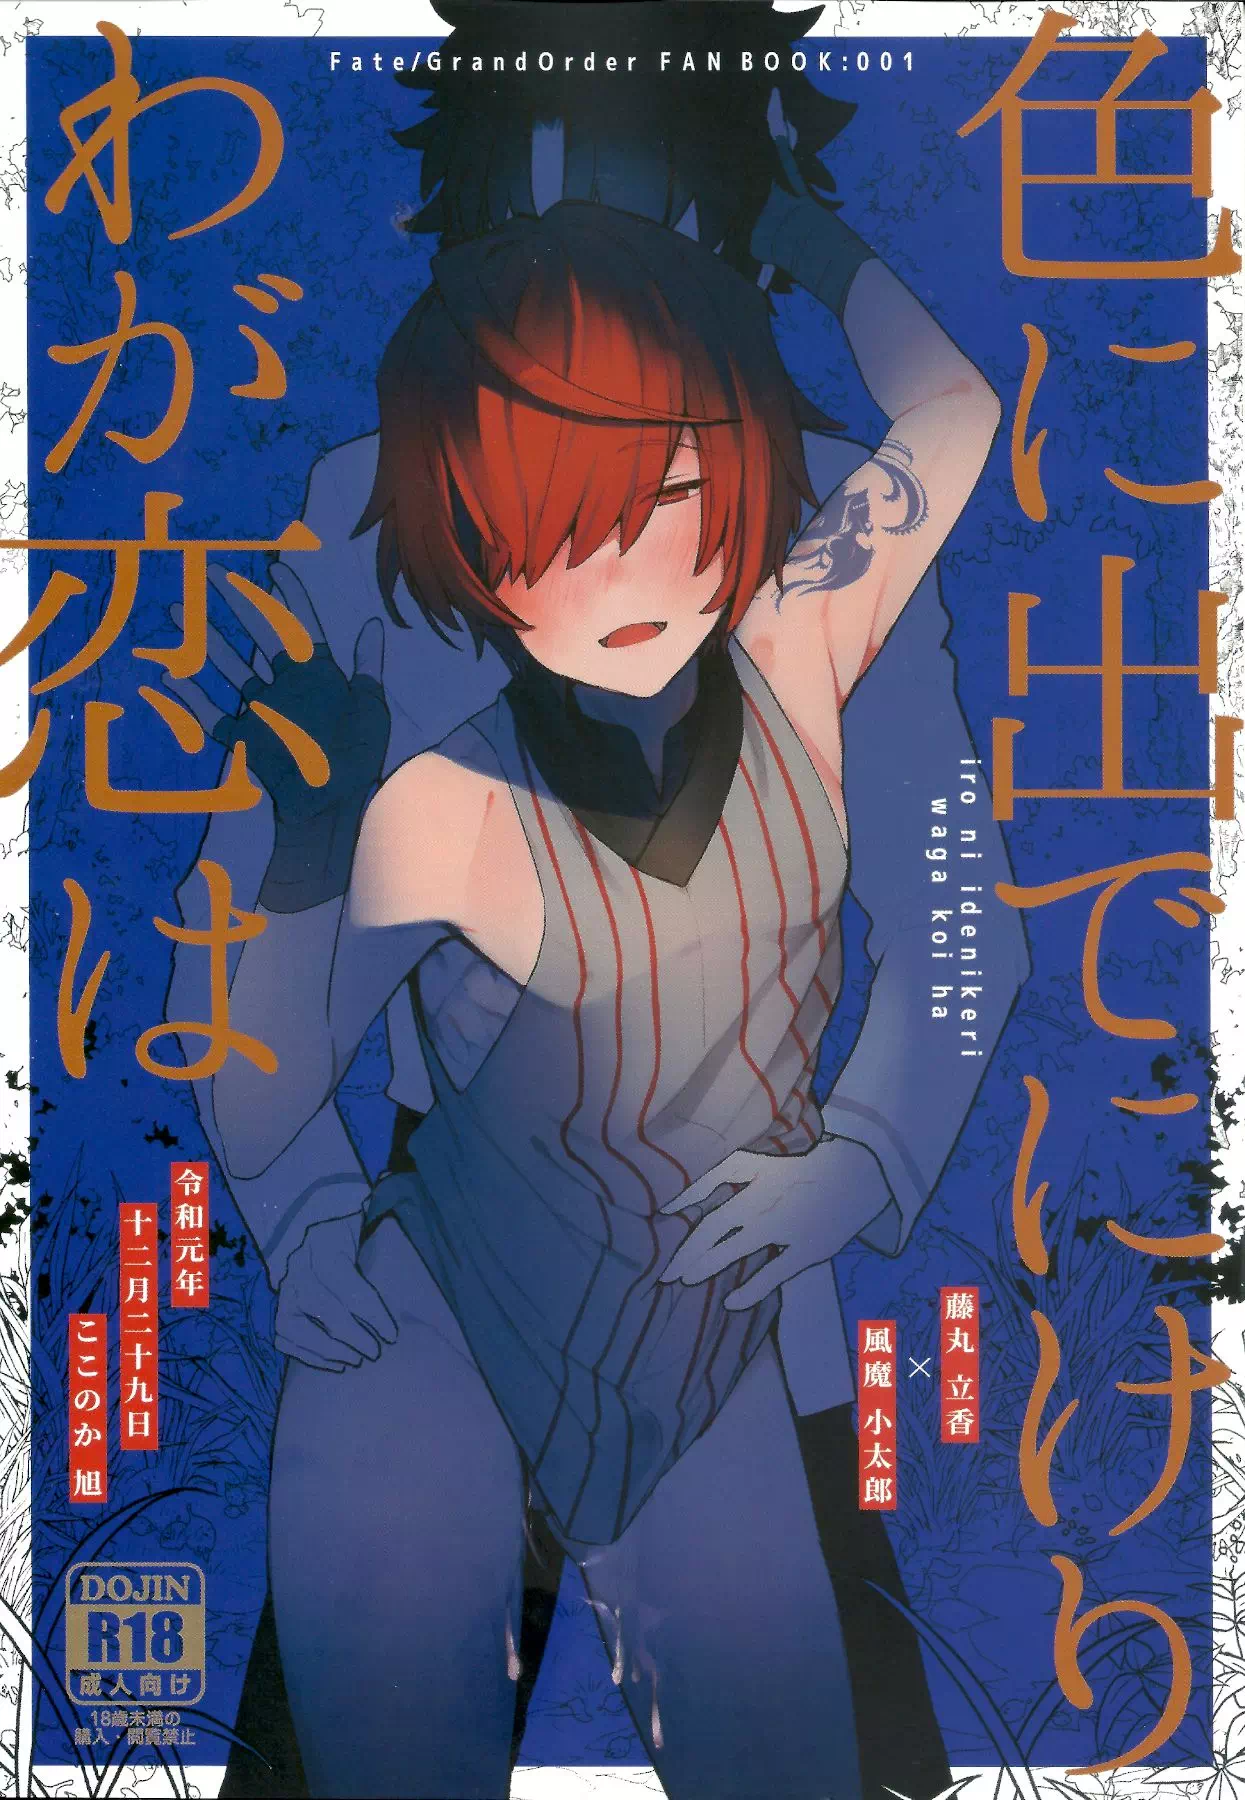 Yaoi hentai manga Fate Grand Order – My love revealed itself in colours